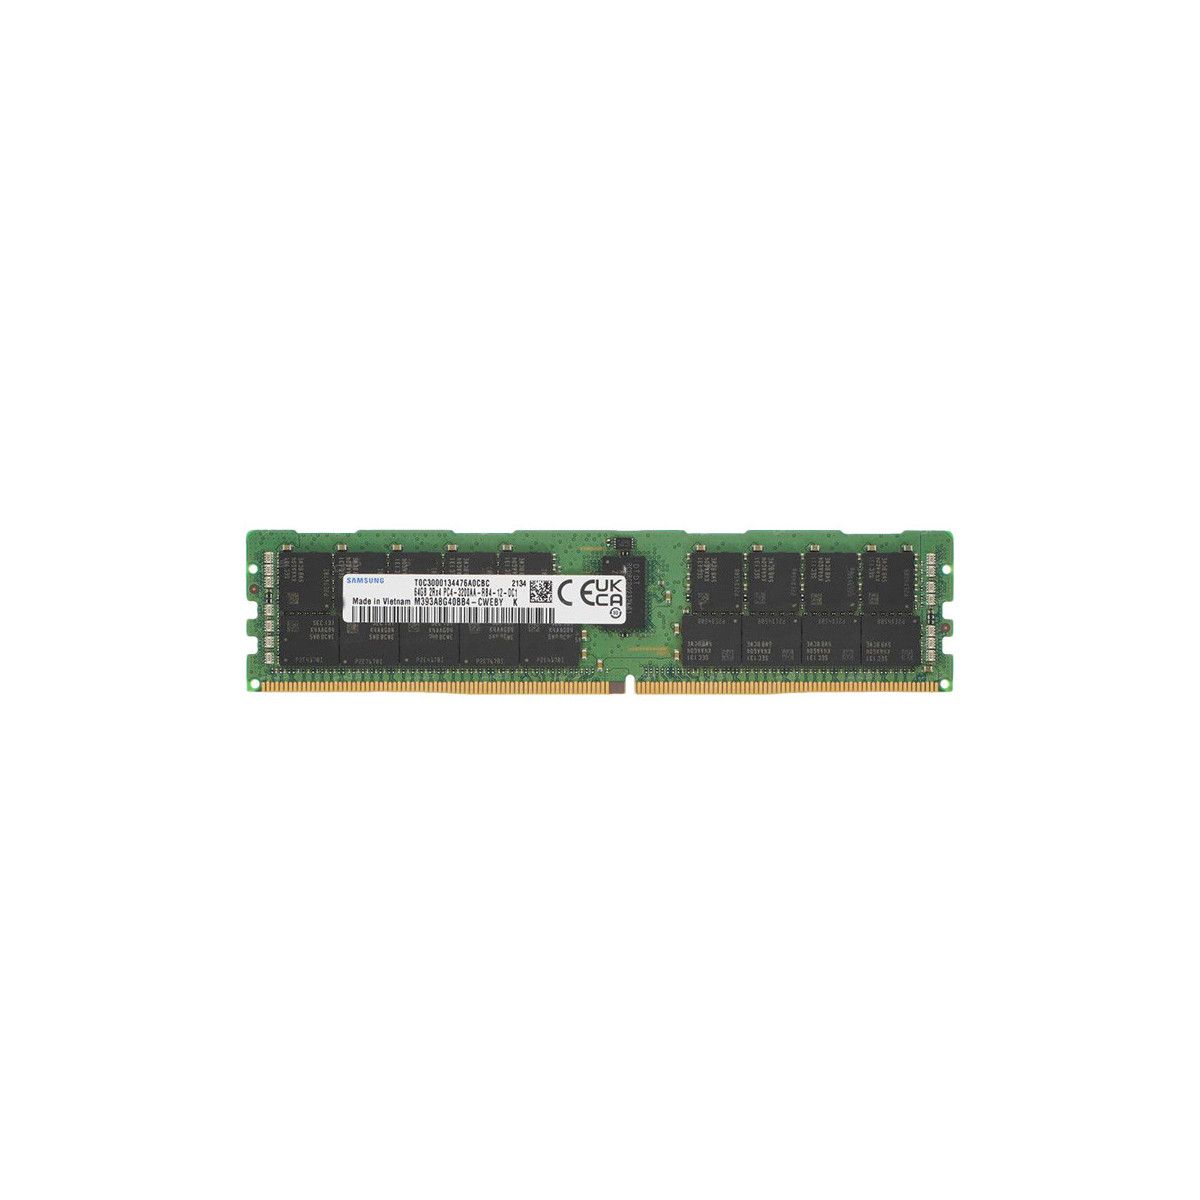 AA799110-MS - Memstar 1x 64GB DDR4-3200 RDIMM PC4-25600R - Mem-Star OEM compatibile Memoria 1 - Memstar 